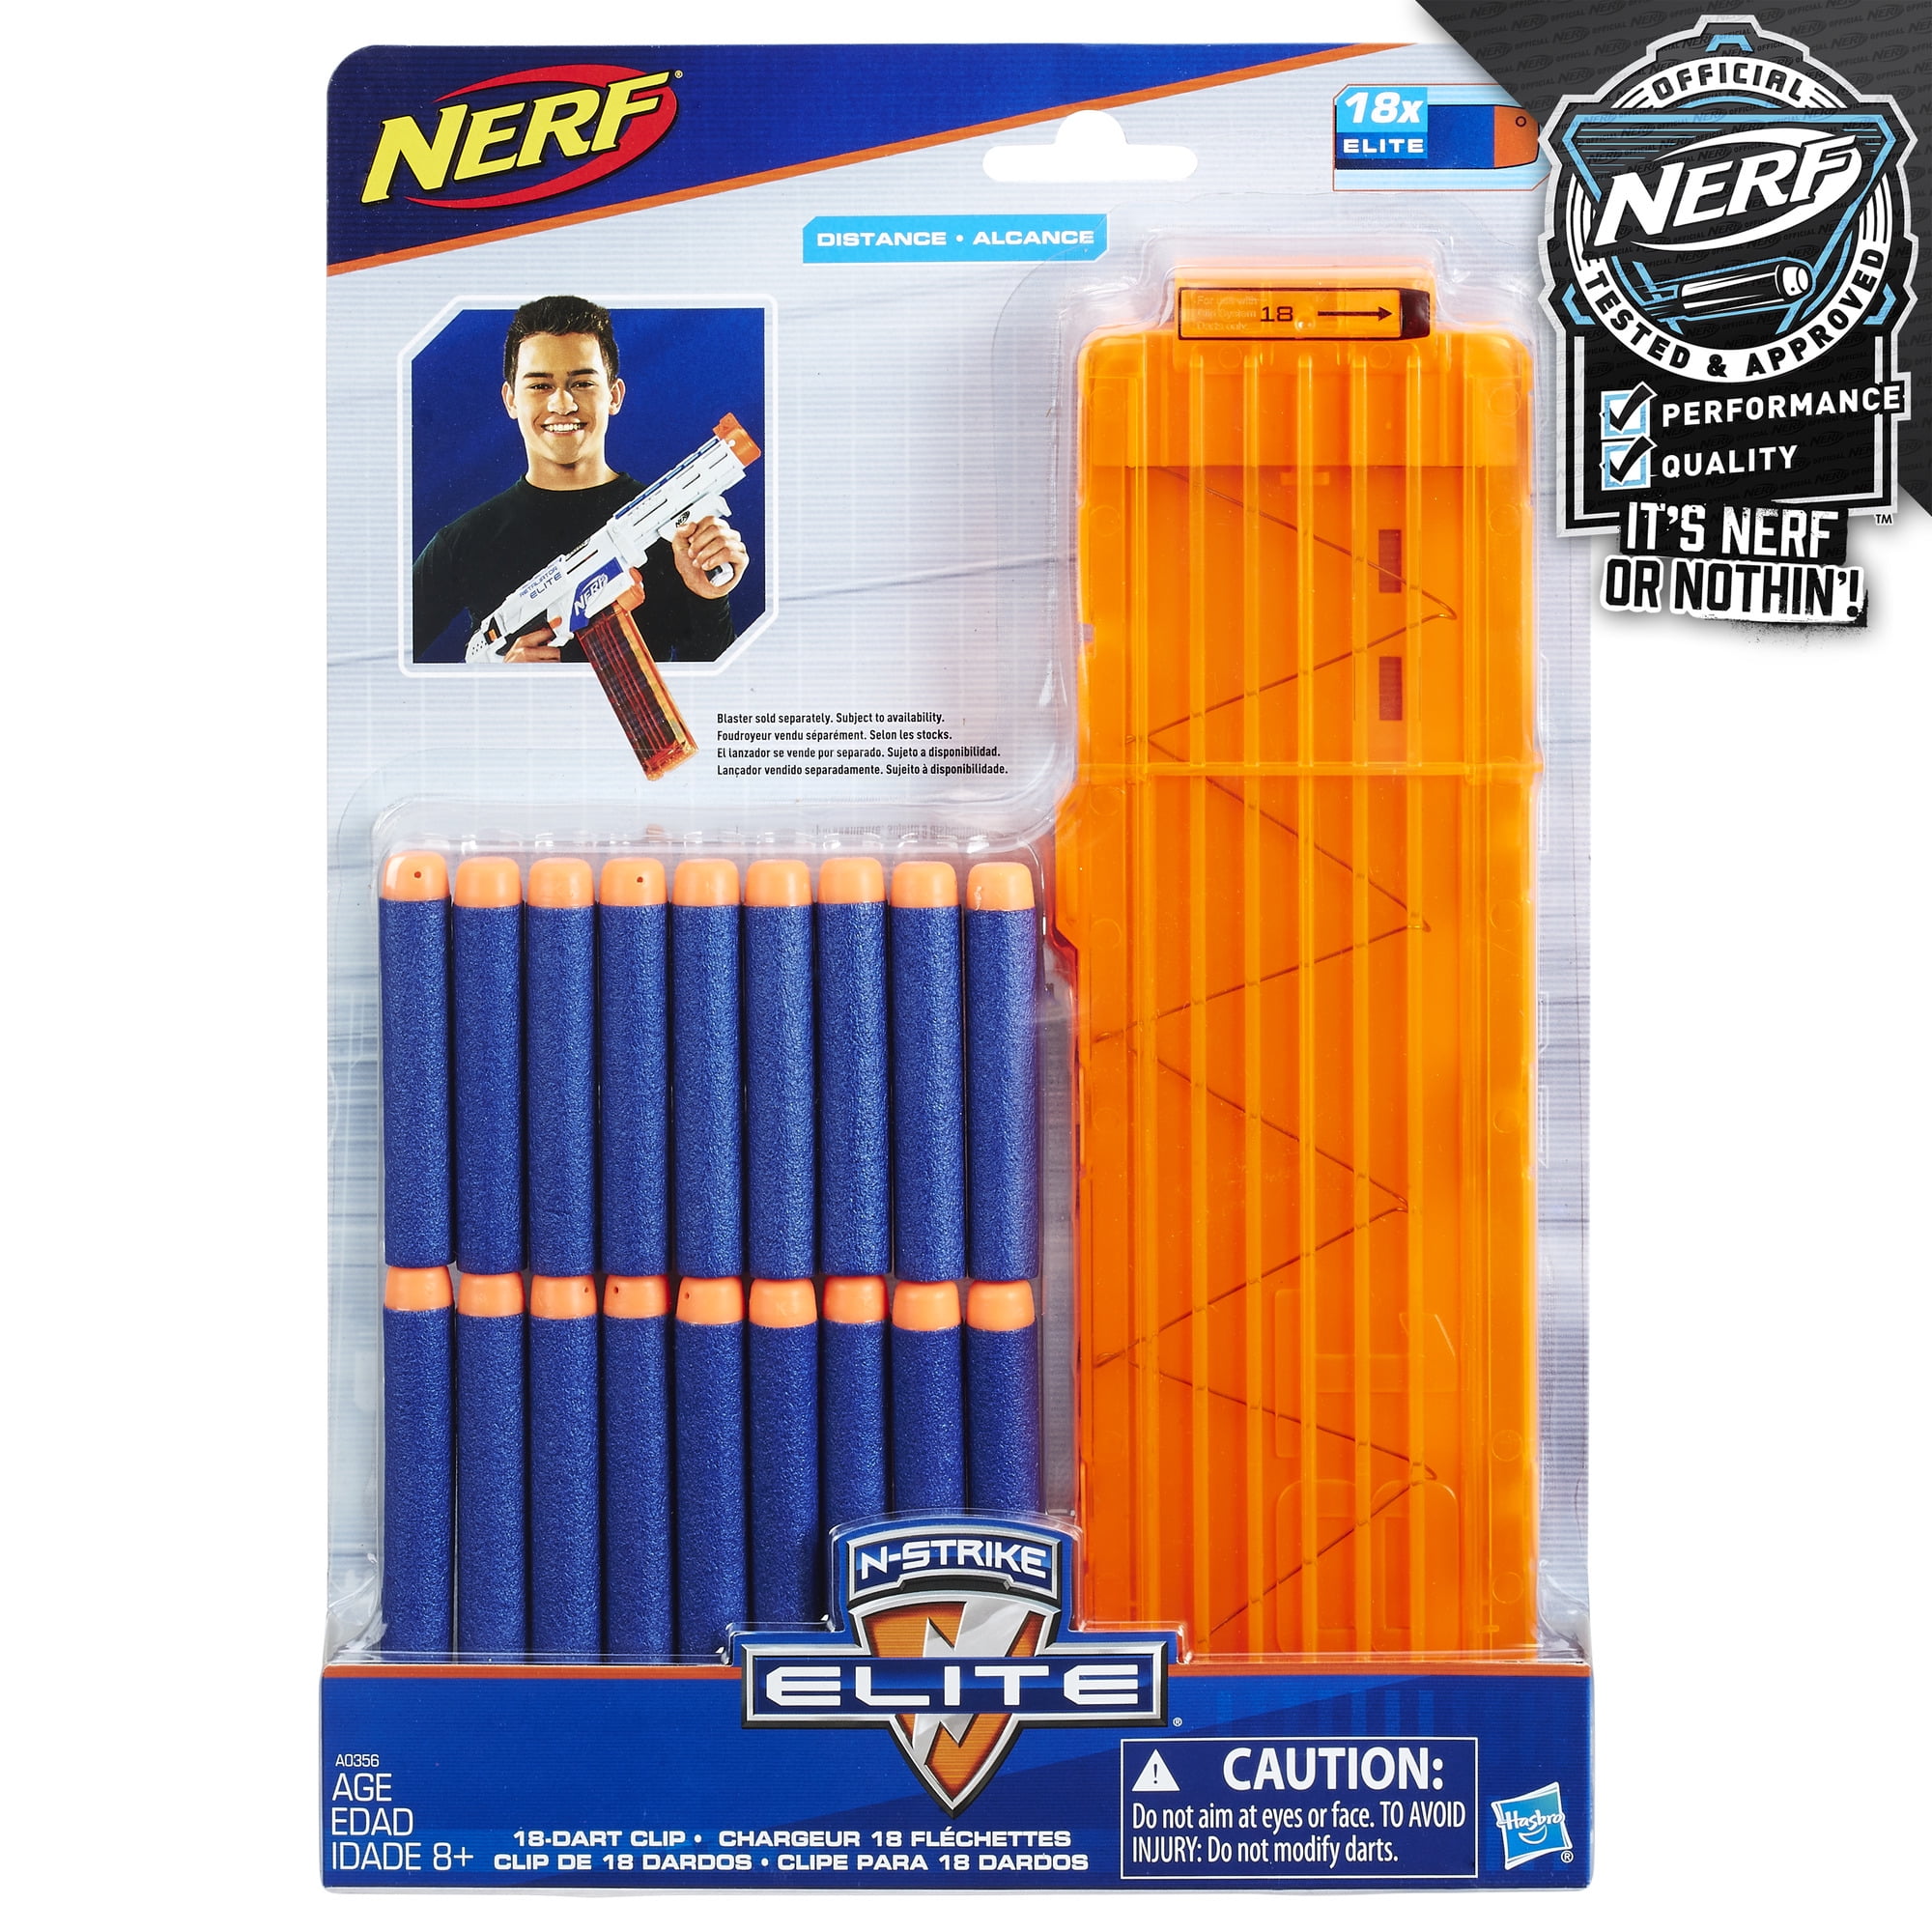 NEW ! Nerf Dart Refill 250 N-Strike Elite Distance Darts Fast shipping! 